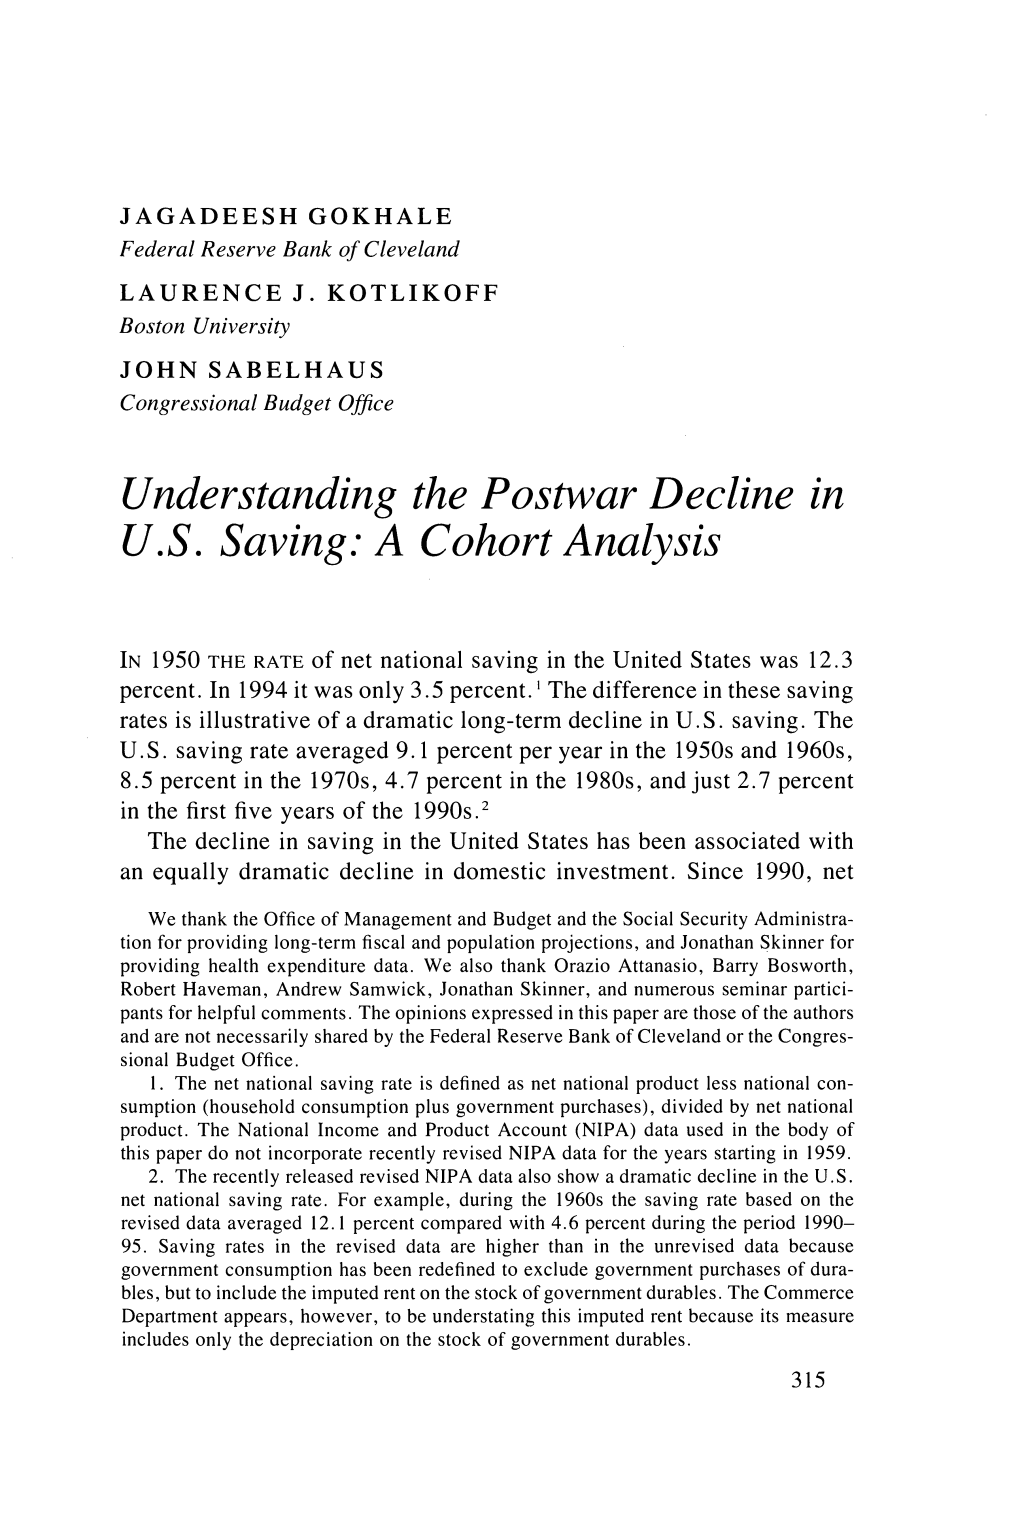 Understanding the Postwar Decline in U.S. Saving: a Cohort Analysis